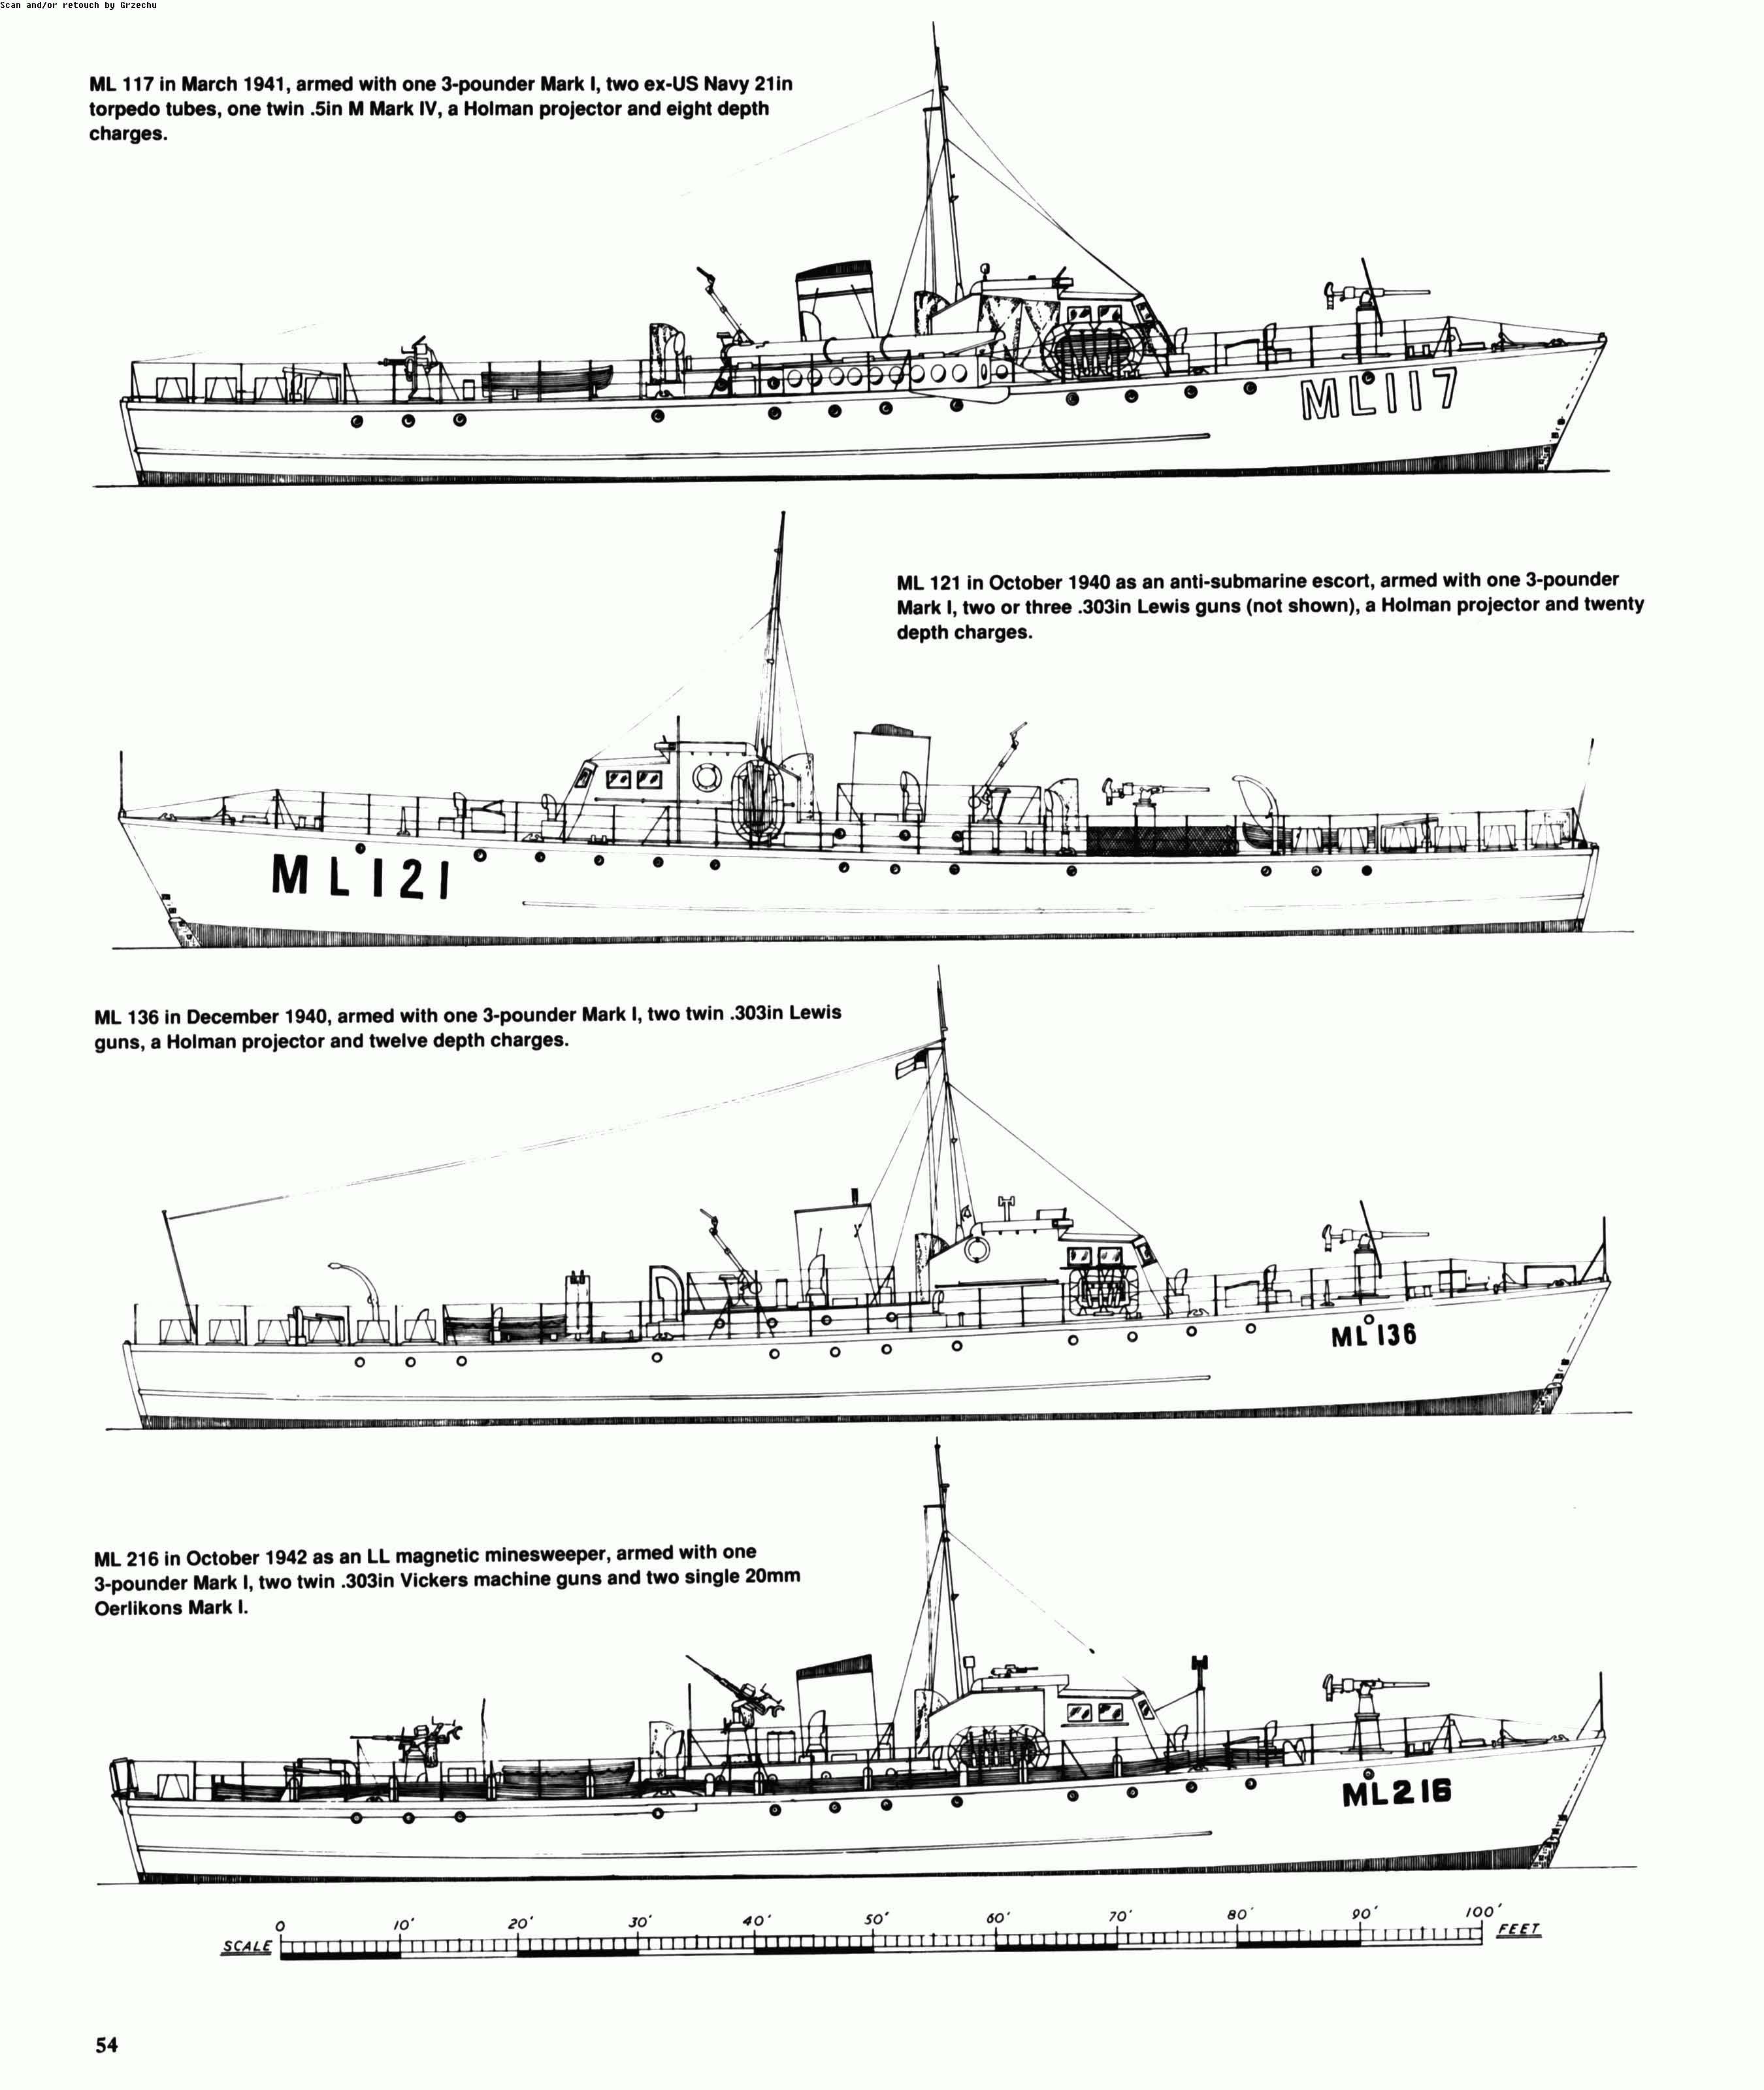 Allied Coastal Forces of World War II (1) Fairmile designs & U.S. submarine chasers_Page_056.jpg